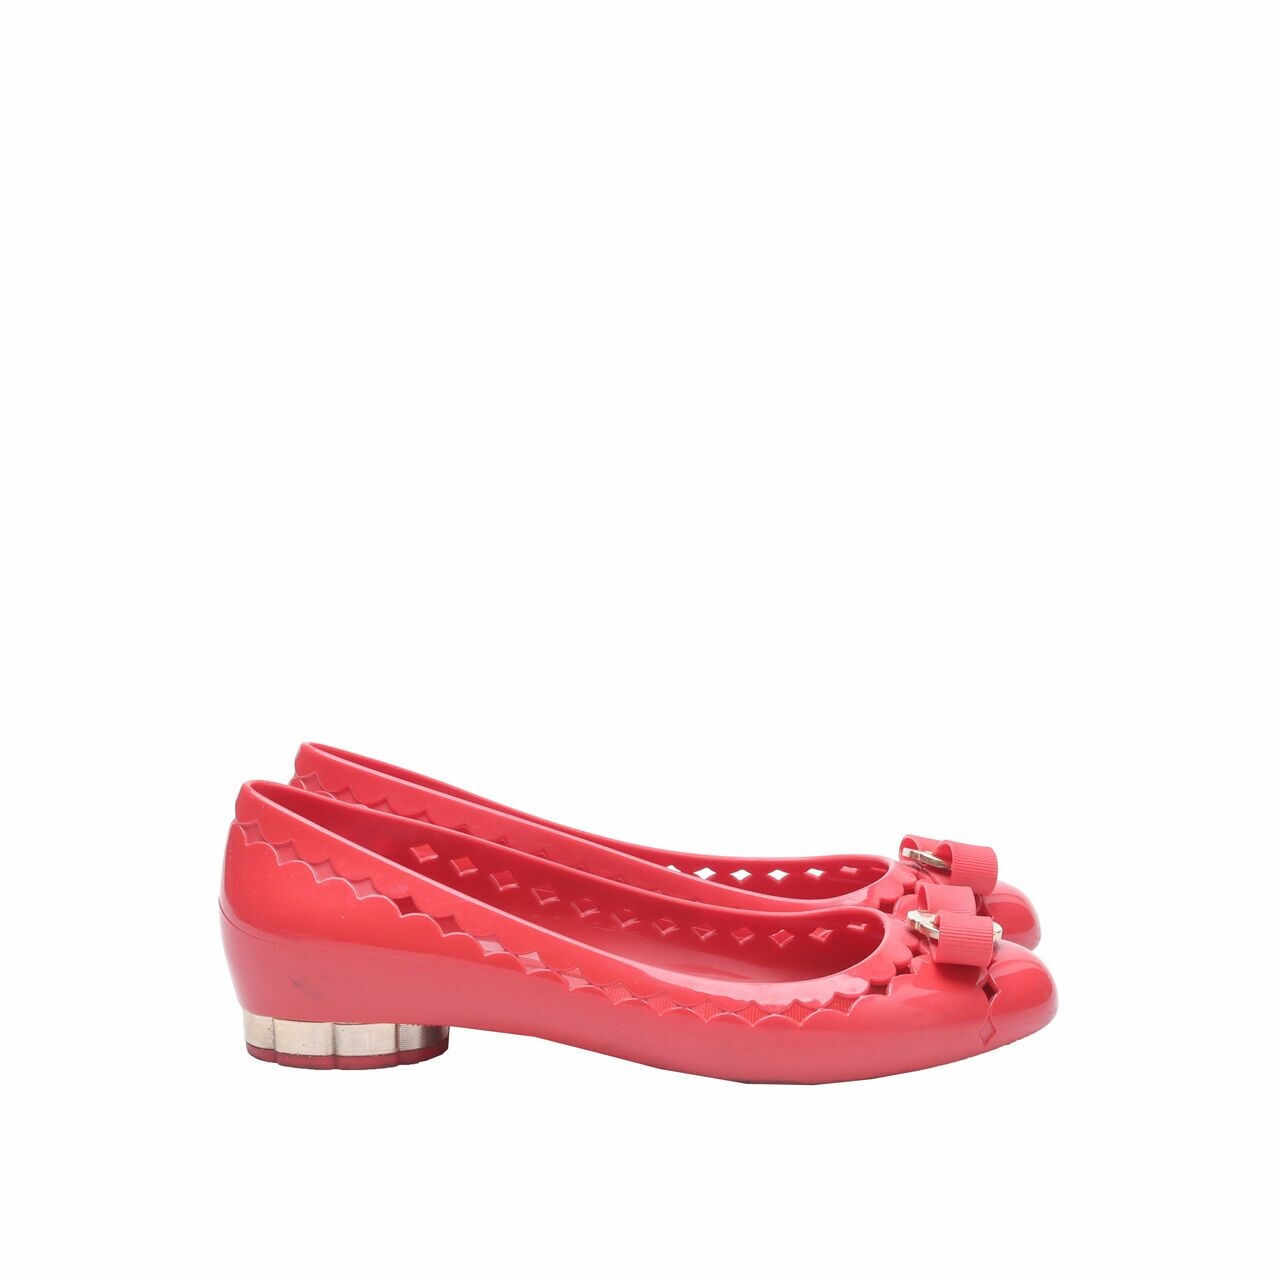 Salvatore Ferragamo Jelly Begonia Ballerina Red Flats Shoes